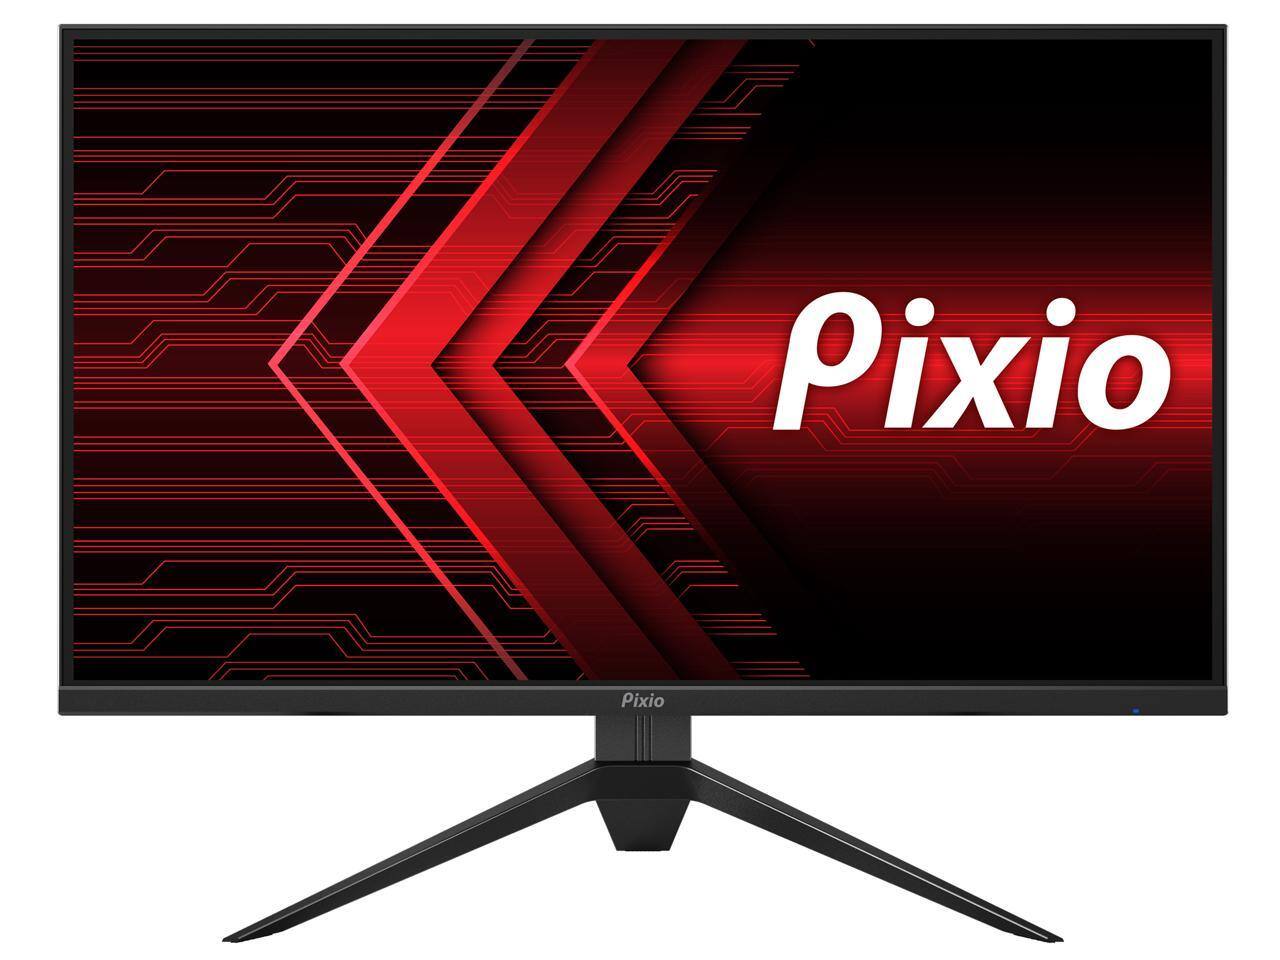 Pixio Certified Refurbished Gaming Monitors B Stock Monitors 60hz 144hz 165hz 240hz Tn Ips Va Starting At 116 Free Shipping